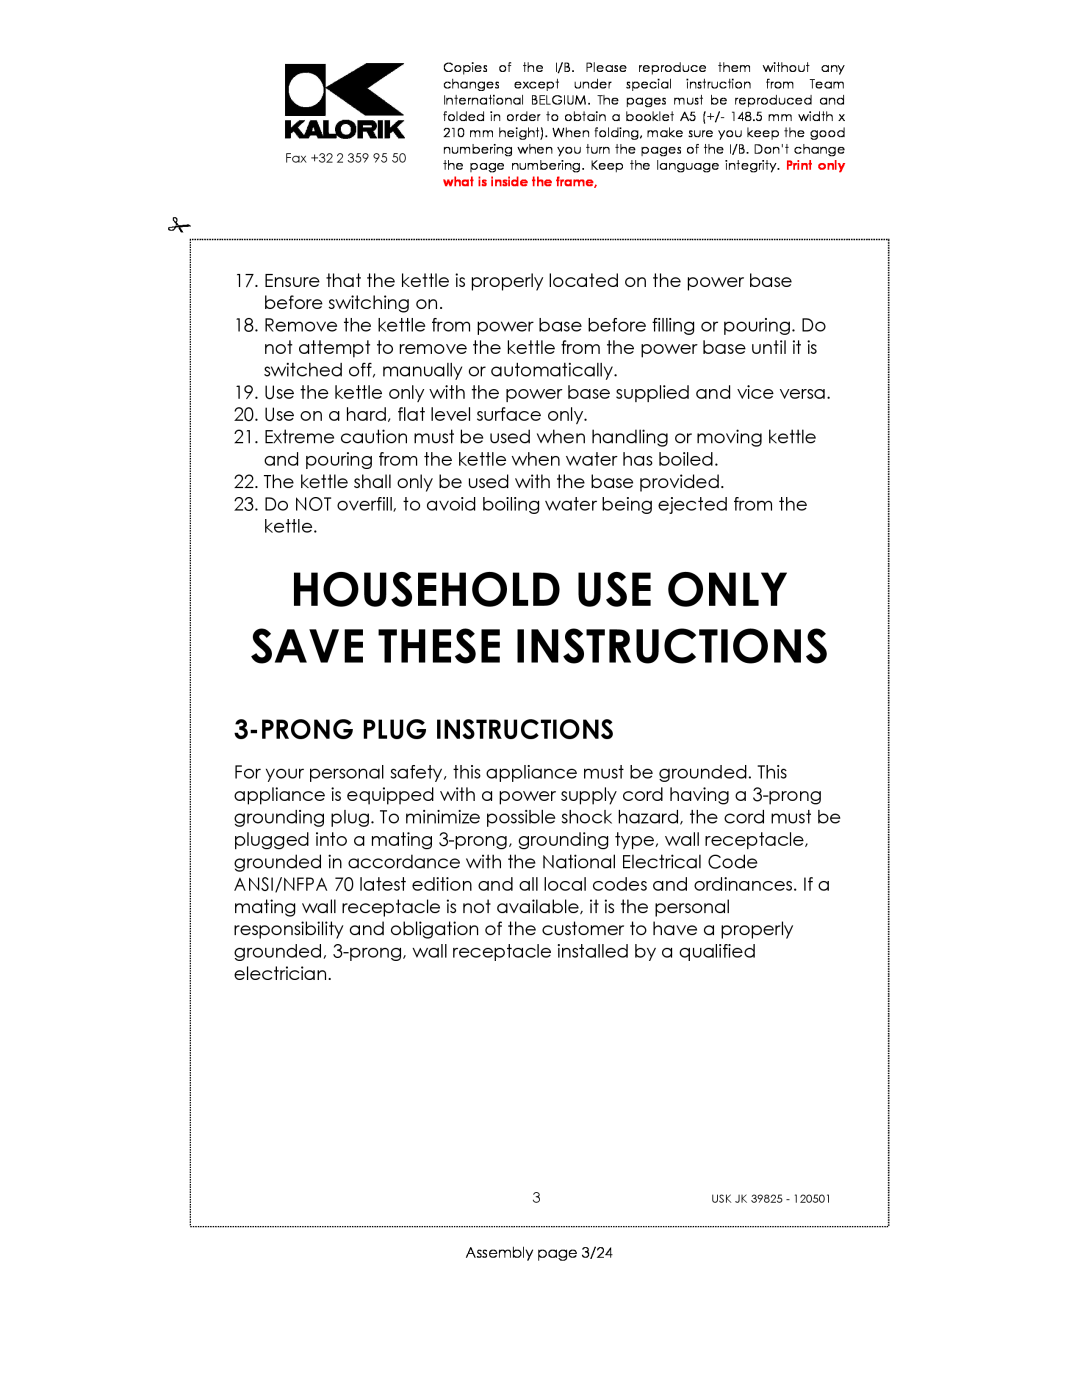 Kalorik JK 39825 manual Household Use Only Save These Instructions, Prongplug Instructions 